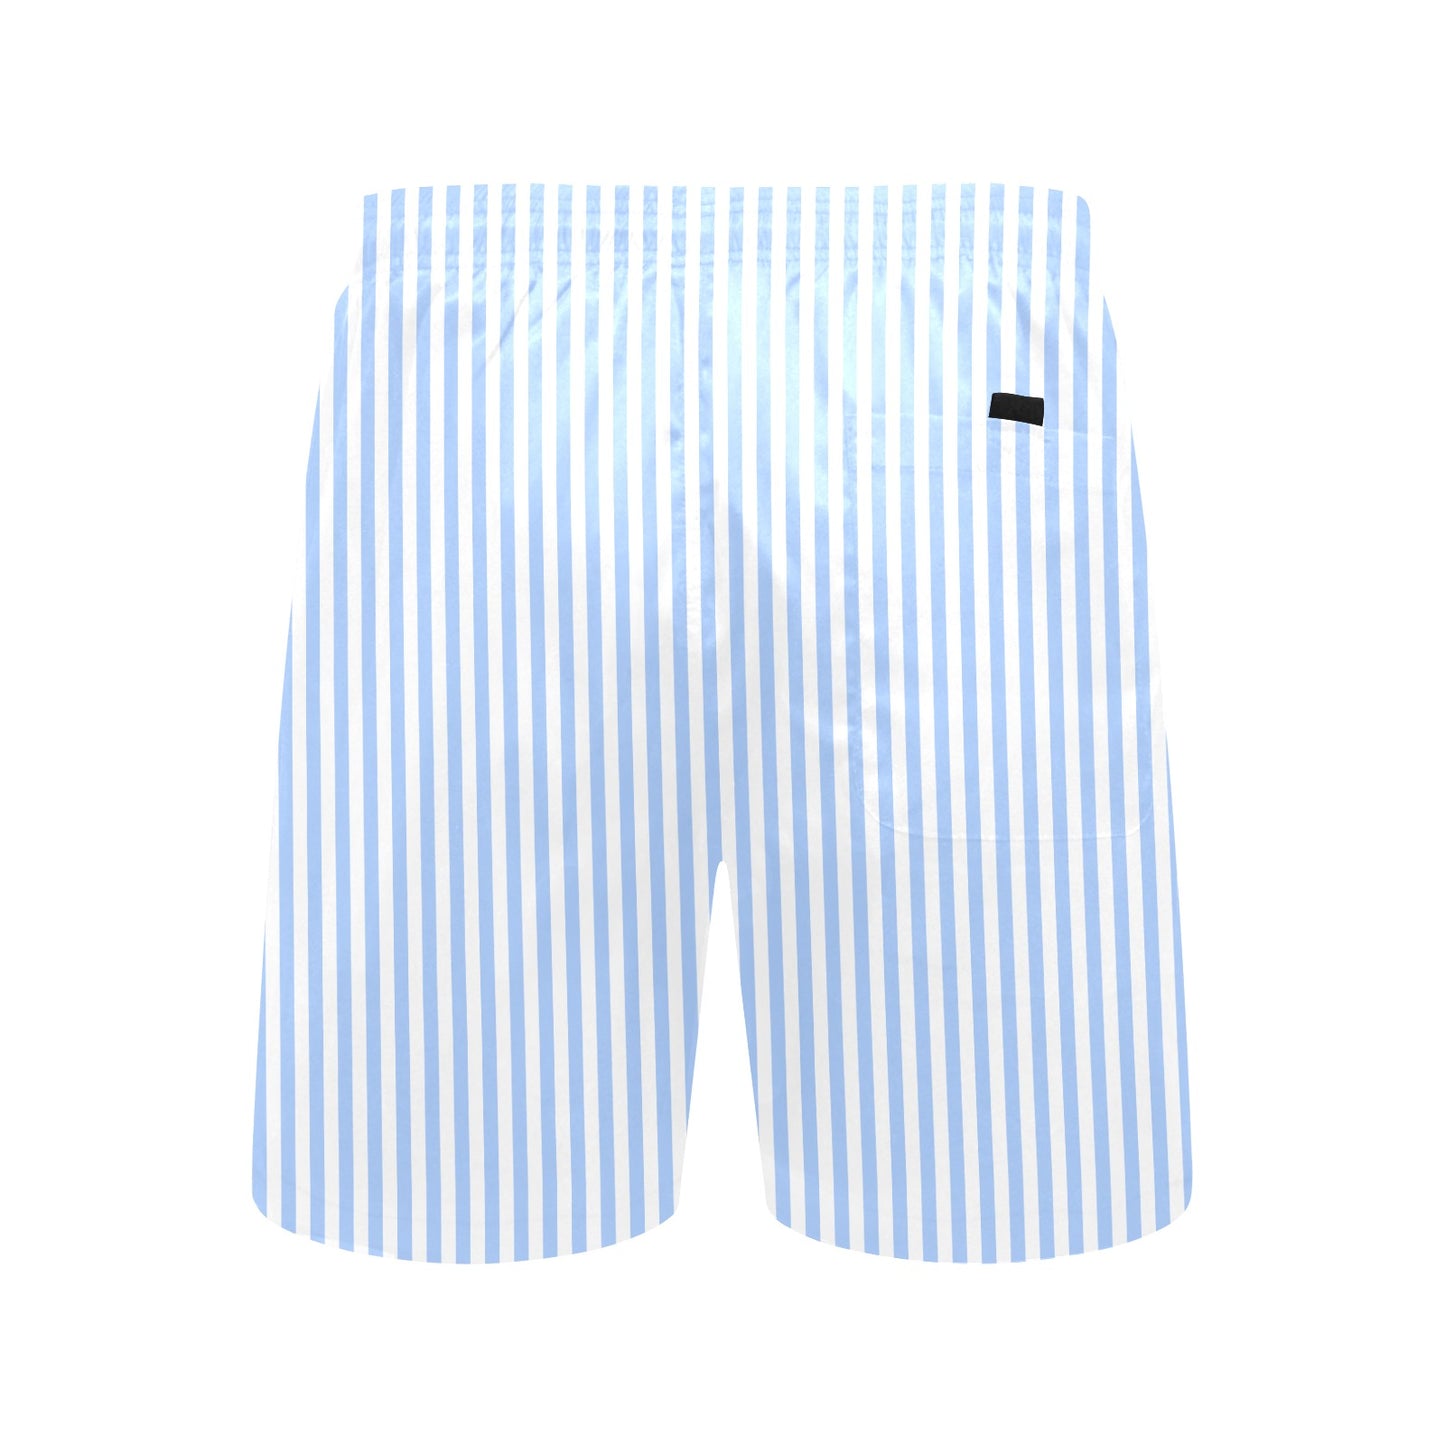 Blue White Striped Men Swim Trunks, Mid Length Shorts Beach Pockets Mesh Lining Drawstring Boys Casual Bathing Suit Plus Size Swimwear